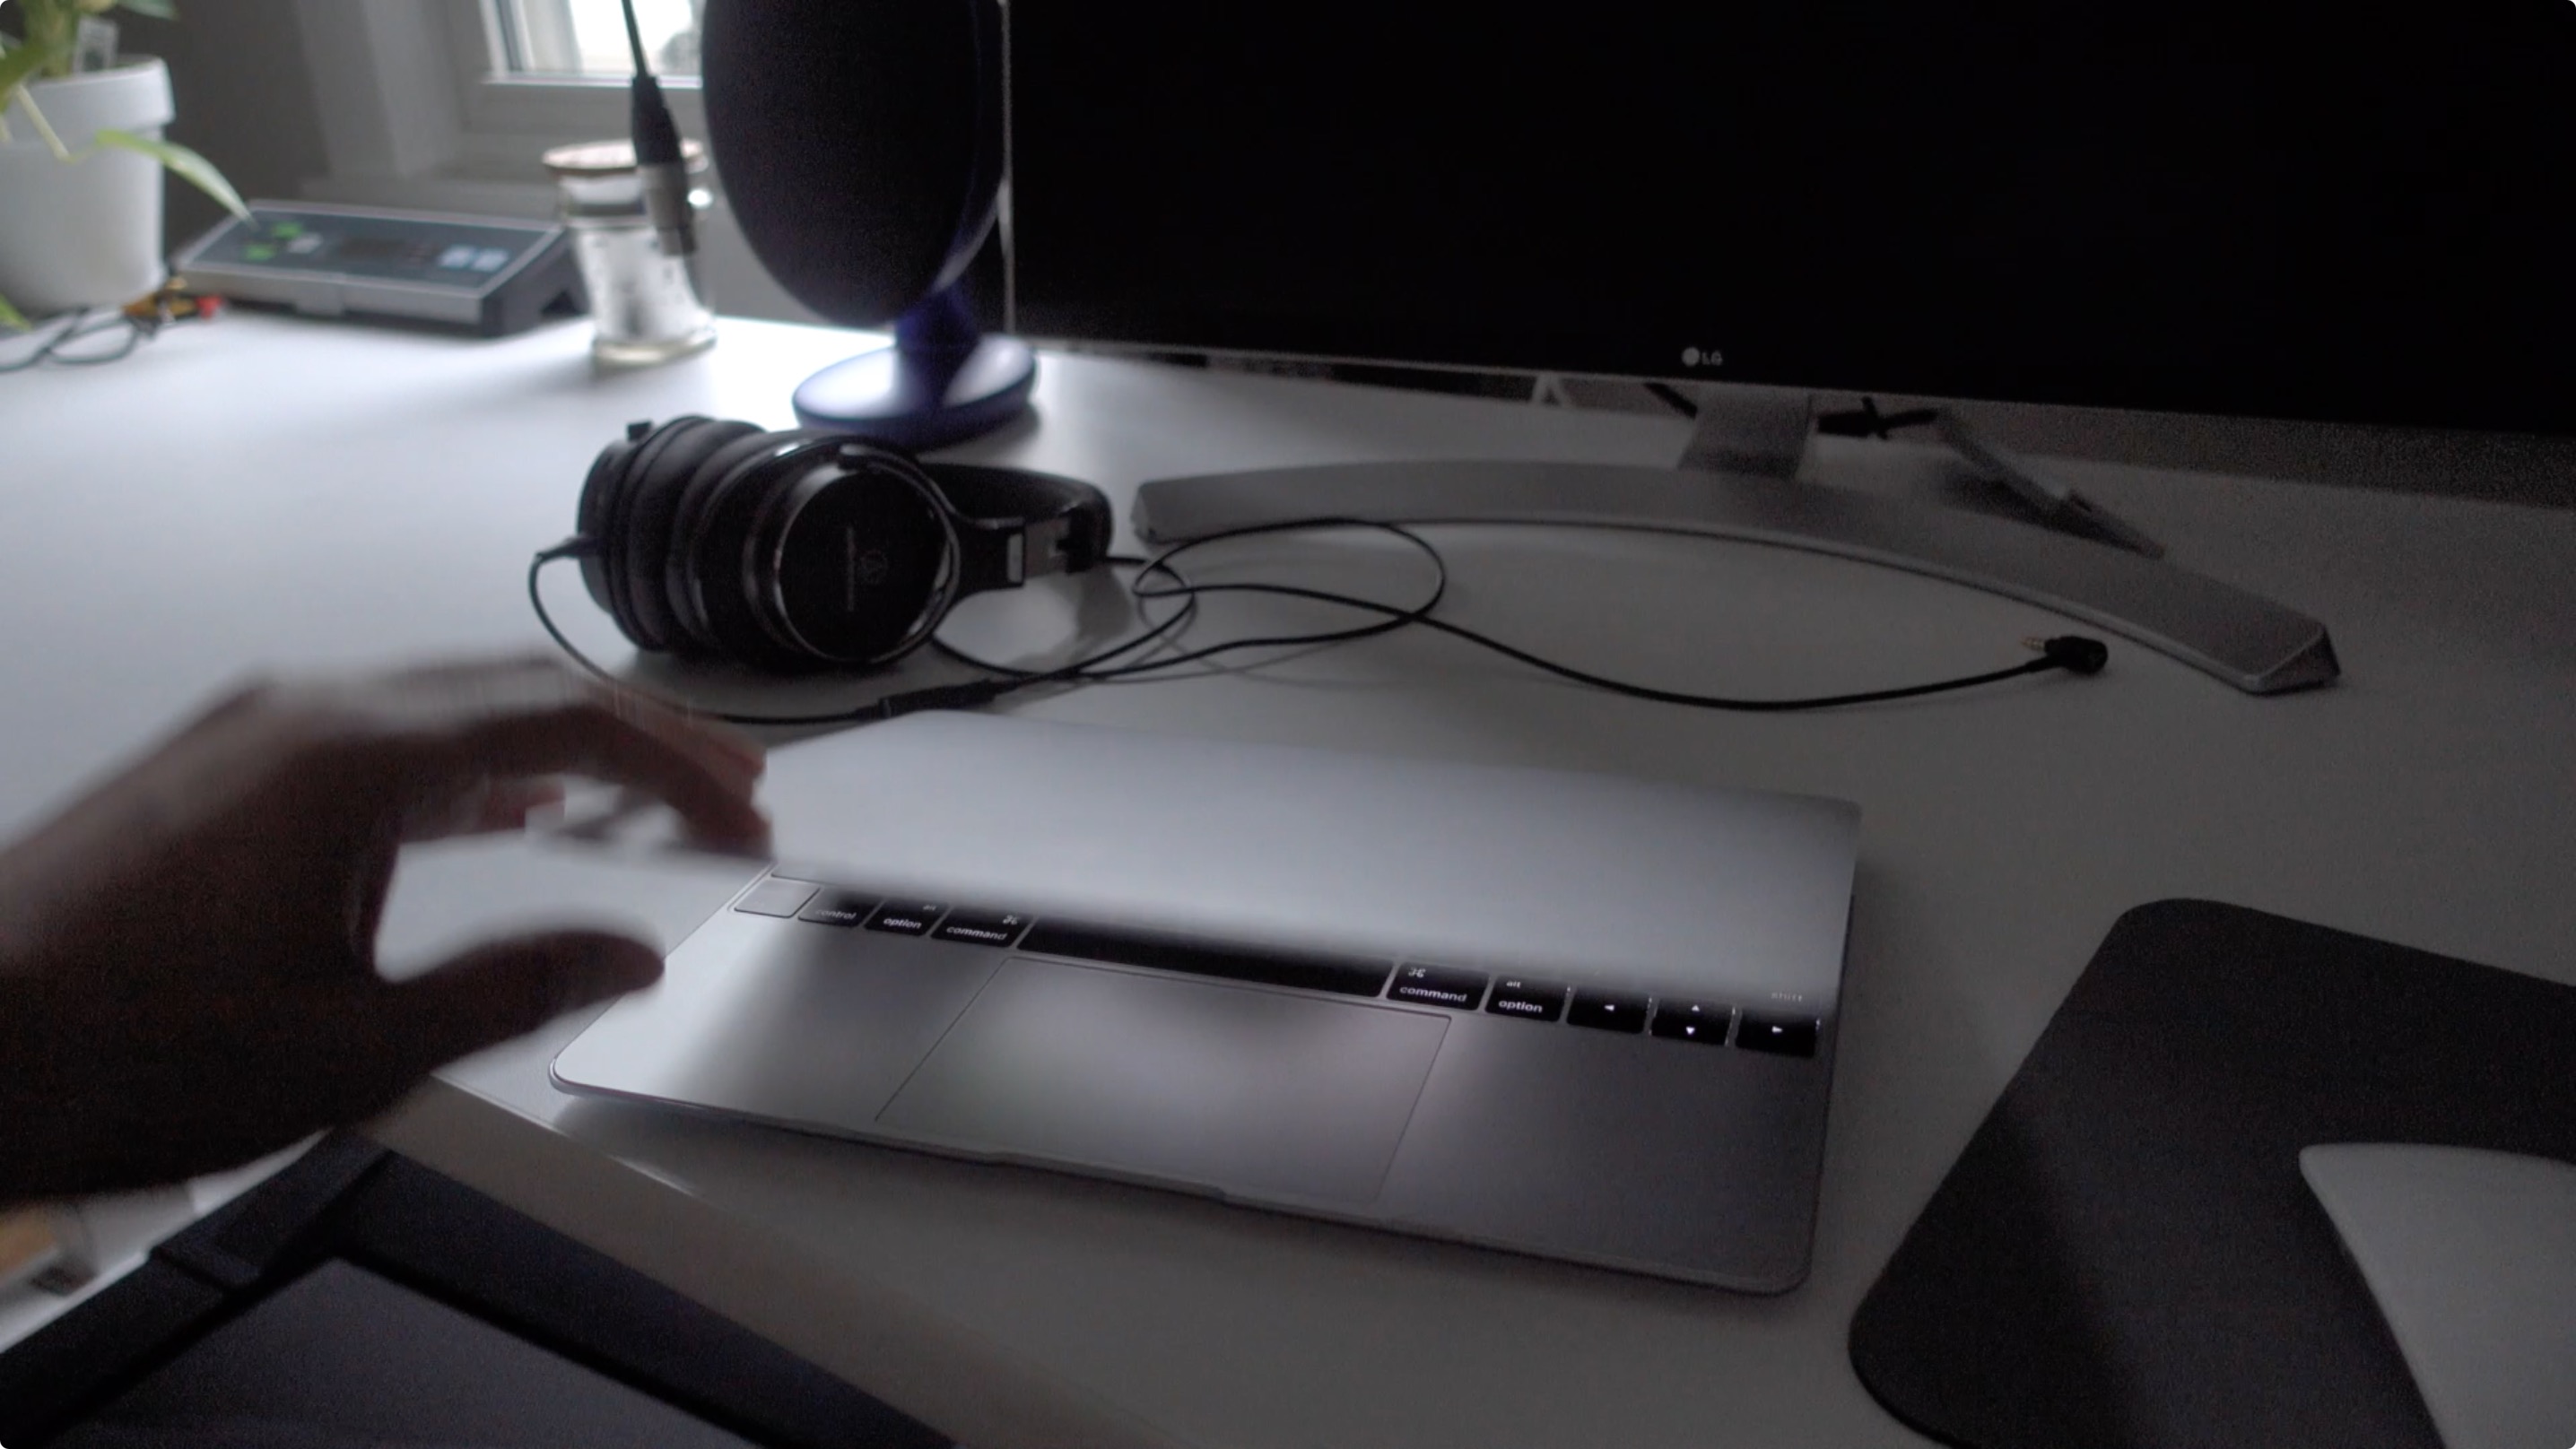 2016 MacBook clamshell mode